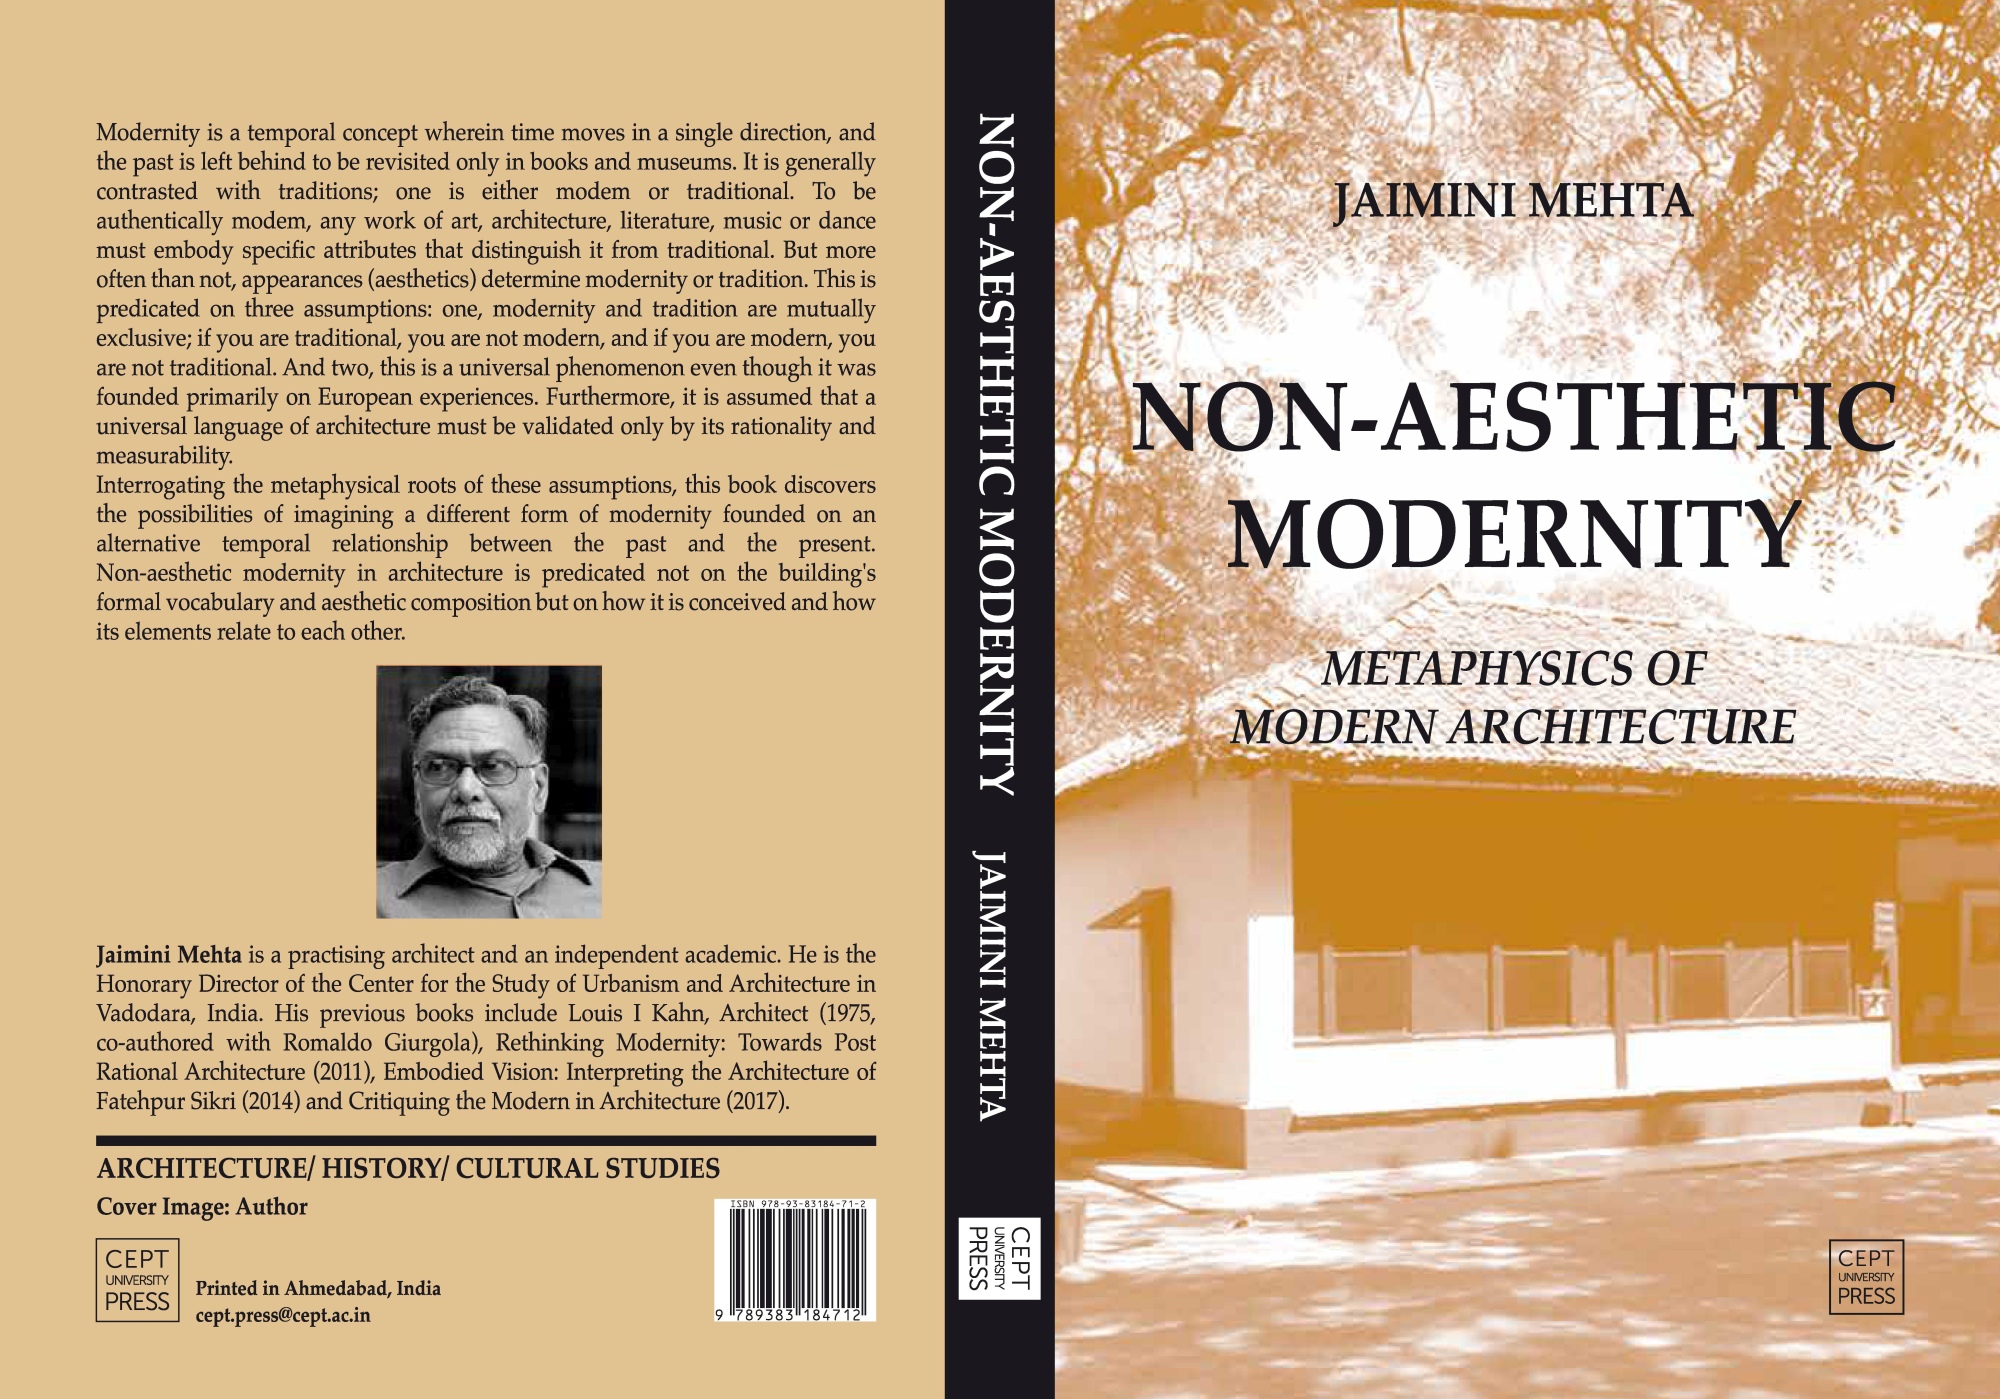 Non-Aesthetic Modernity: Metaphysics of Modern Architecture